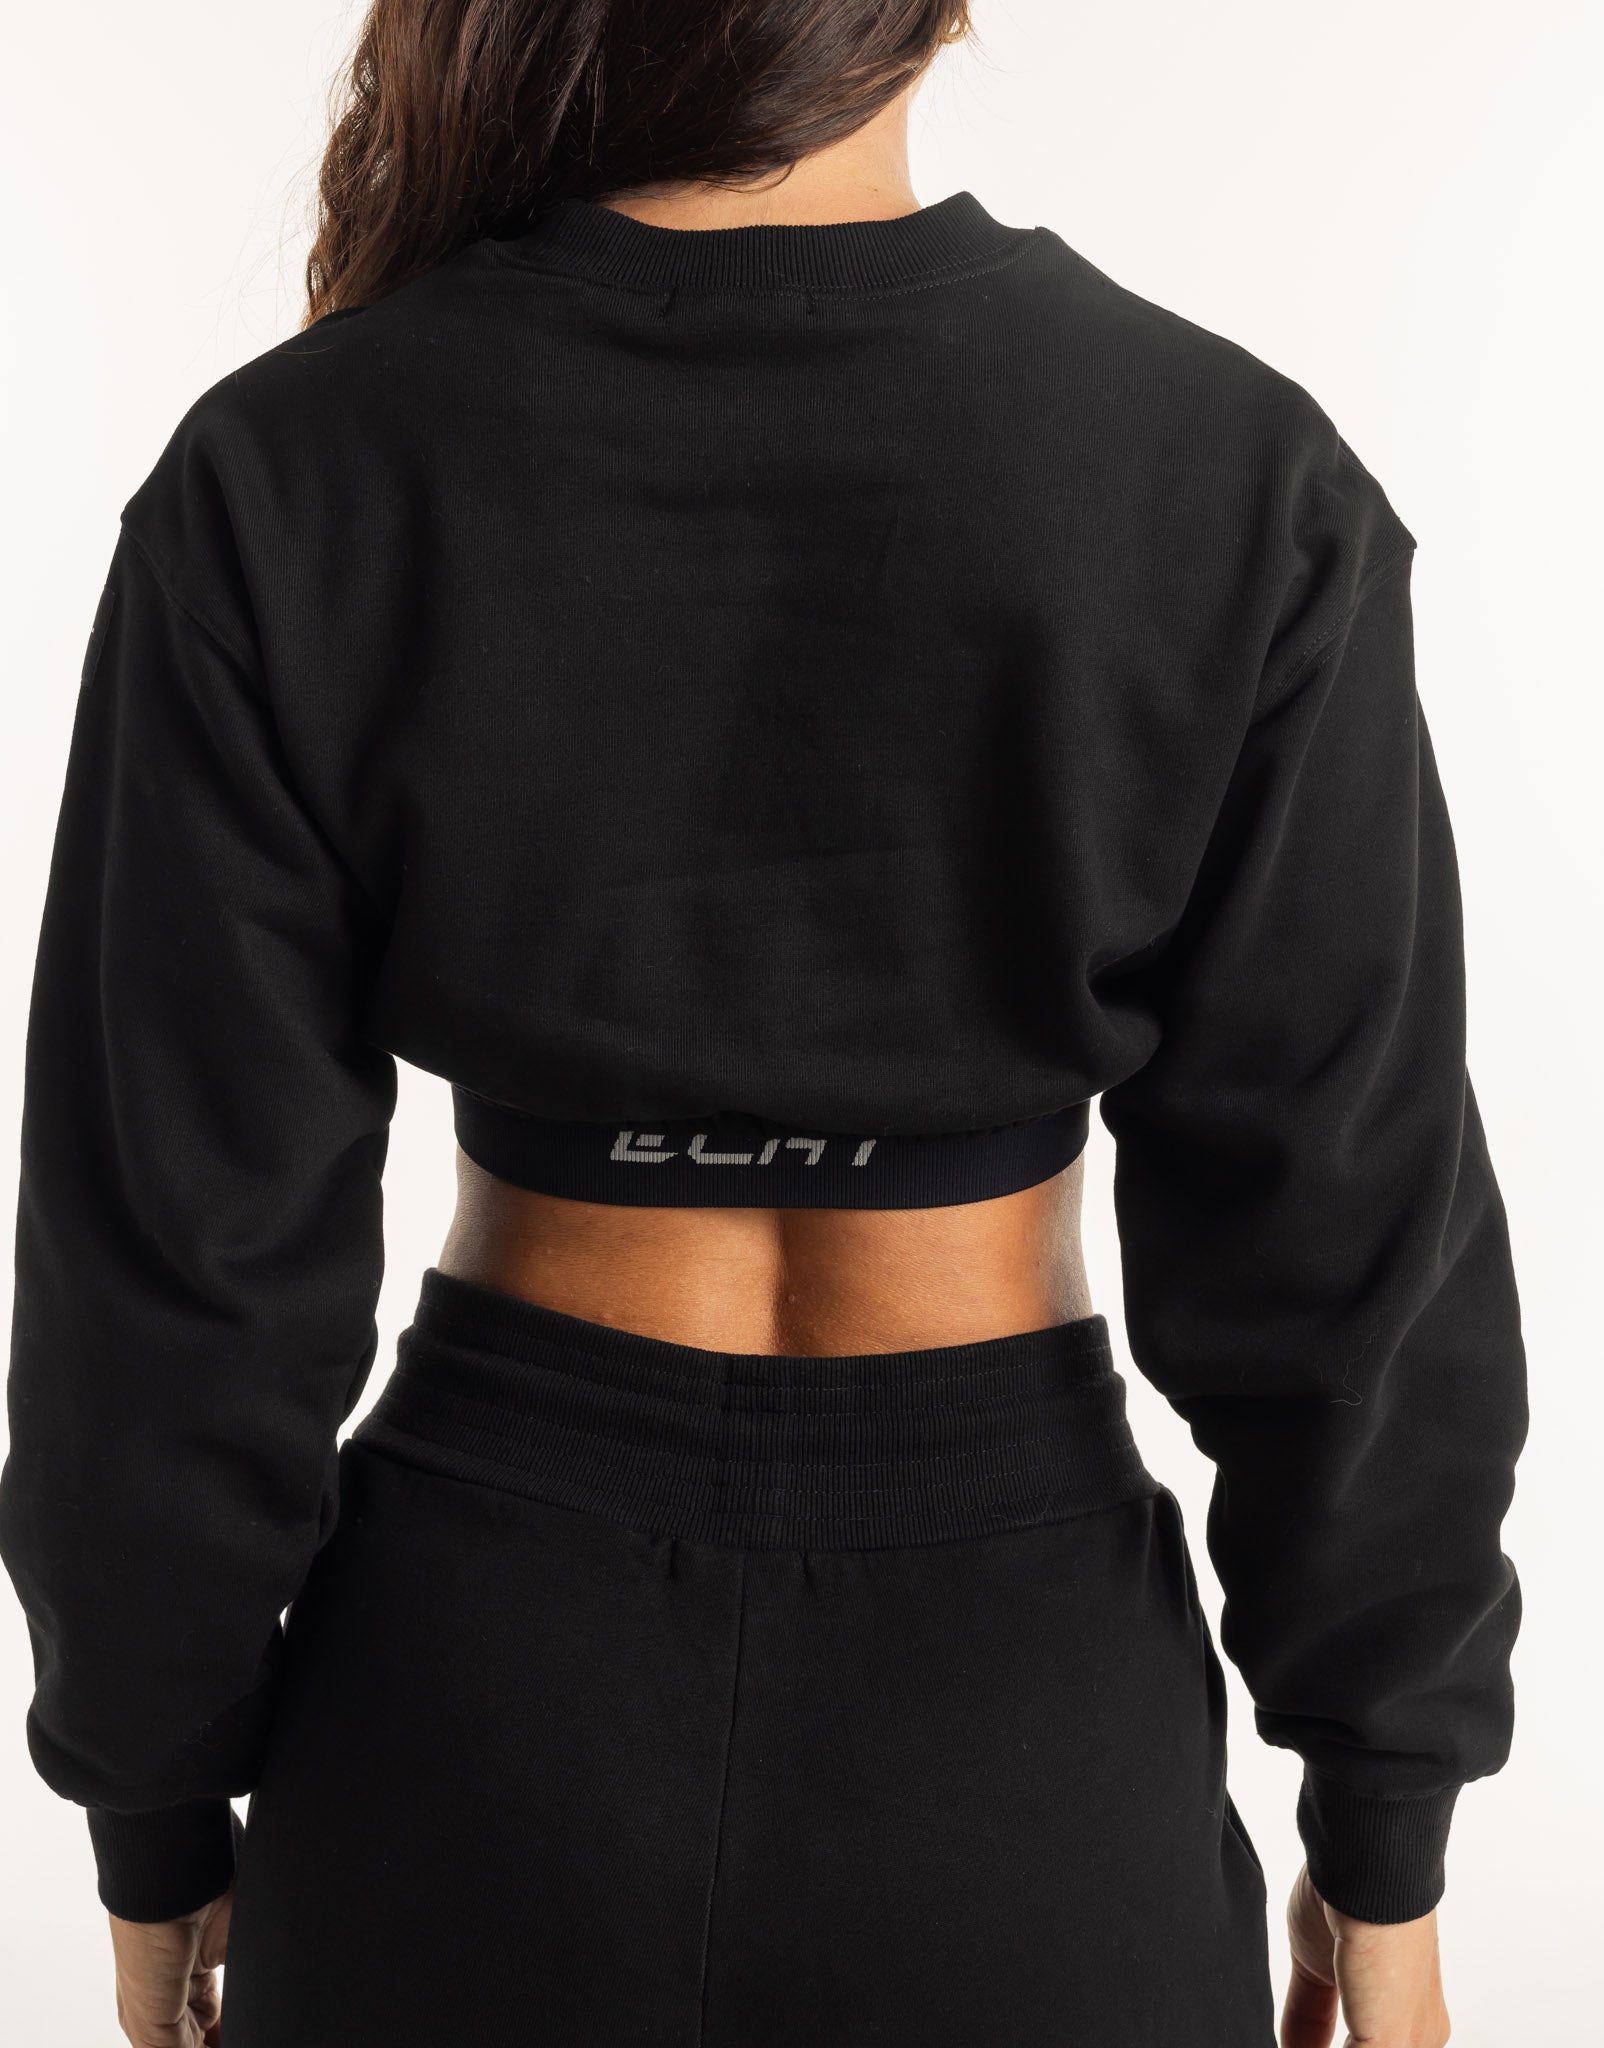 Esteem Cropped Sweater - Black